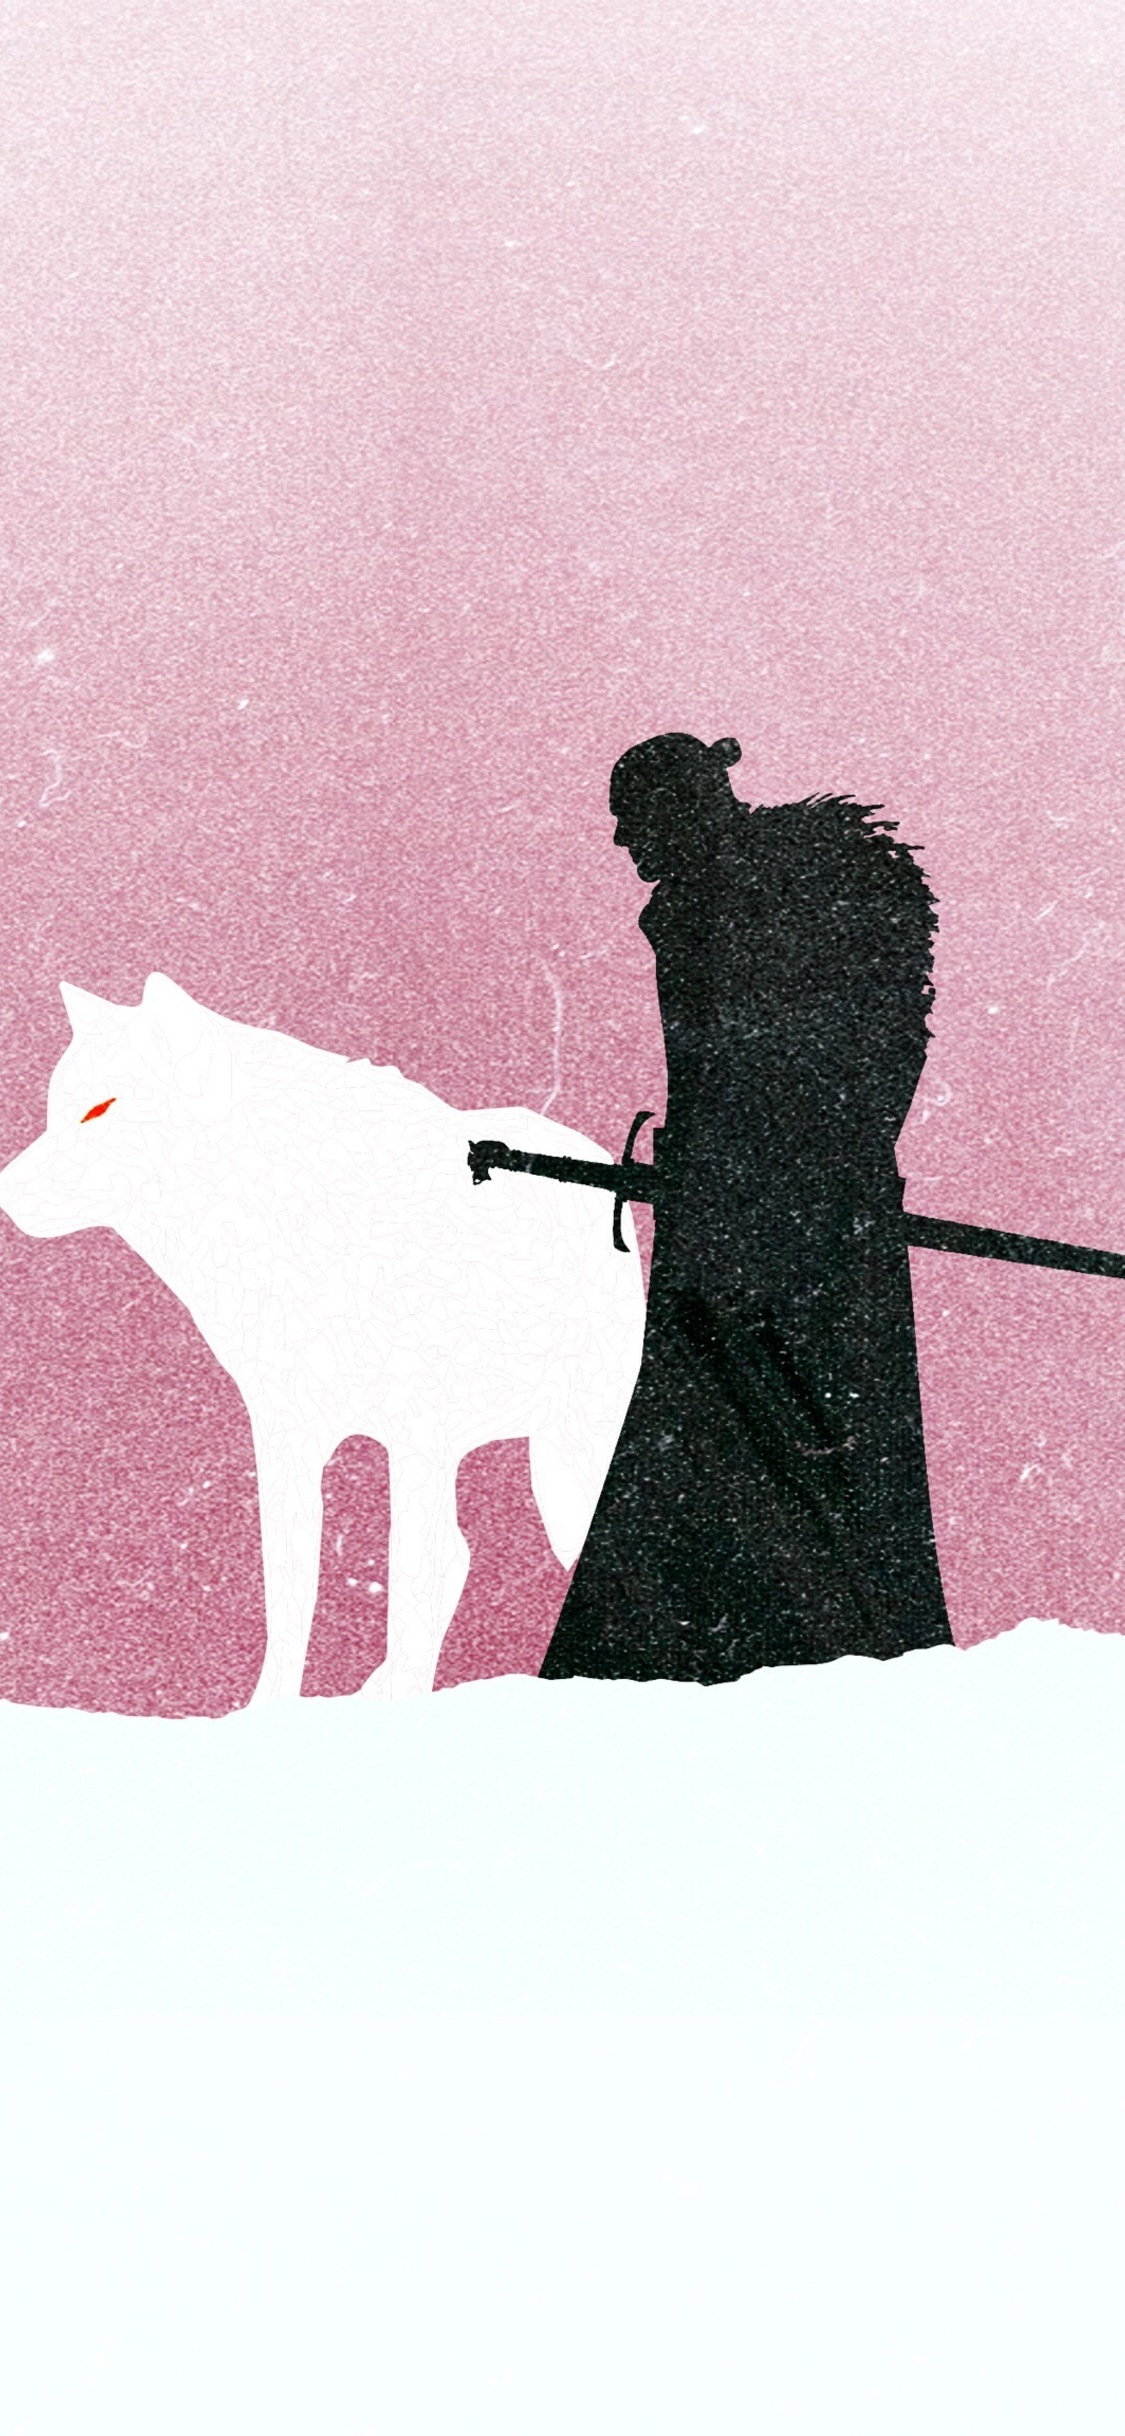 jon-snow-game-of-thrones-minimalism iPhone game of thrones wallpaper